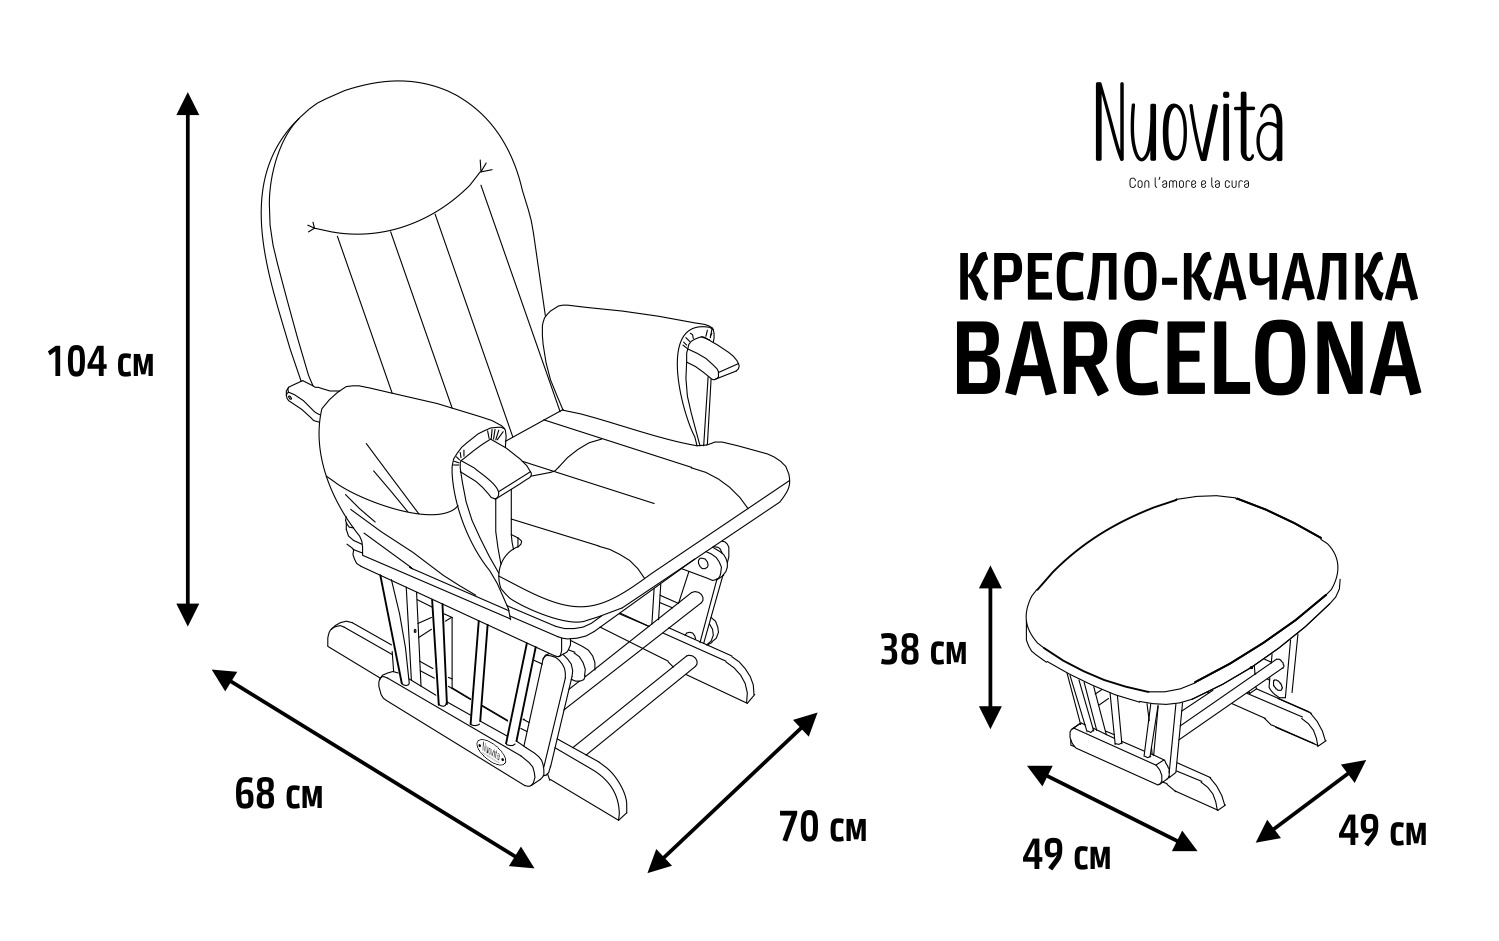 Кресло качалка Nuovita Barcelona